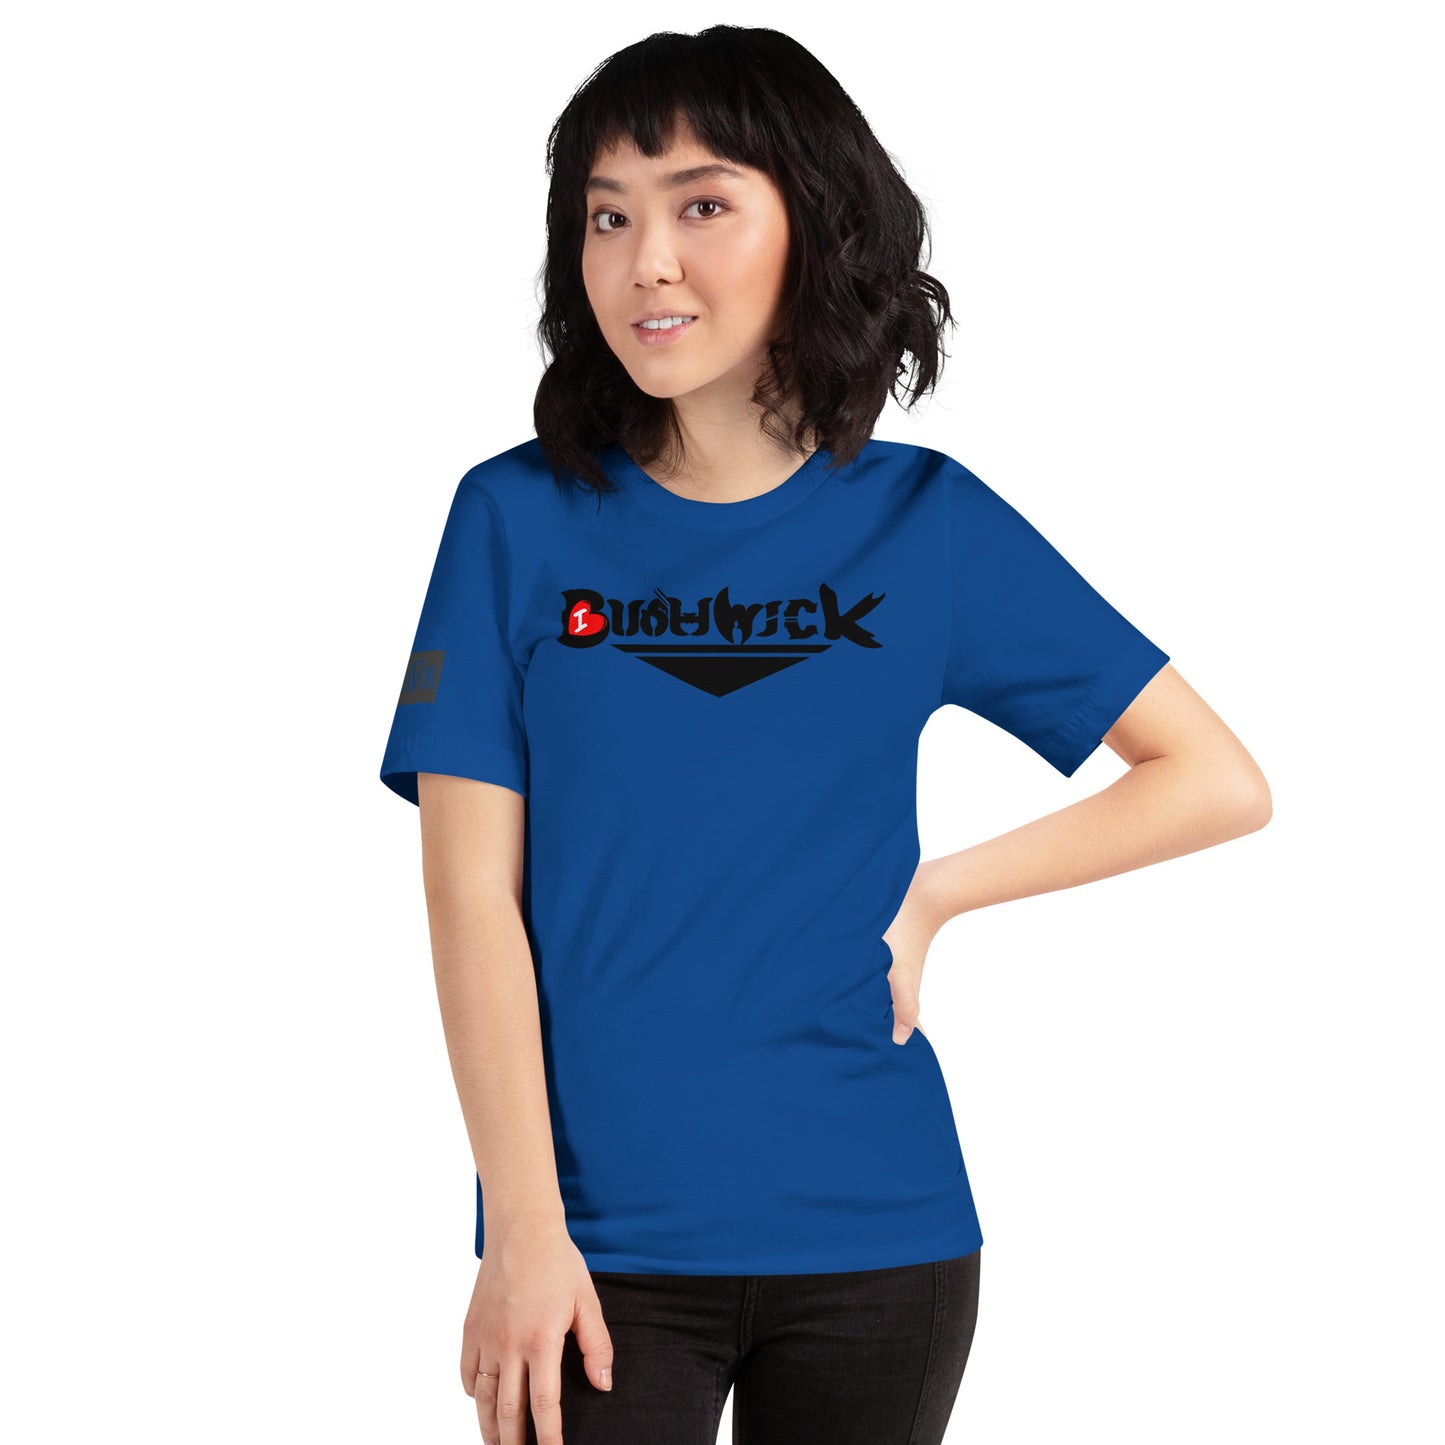 6Bushwick Love Unisex T-Shirt